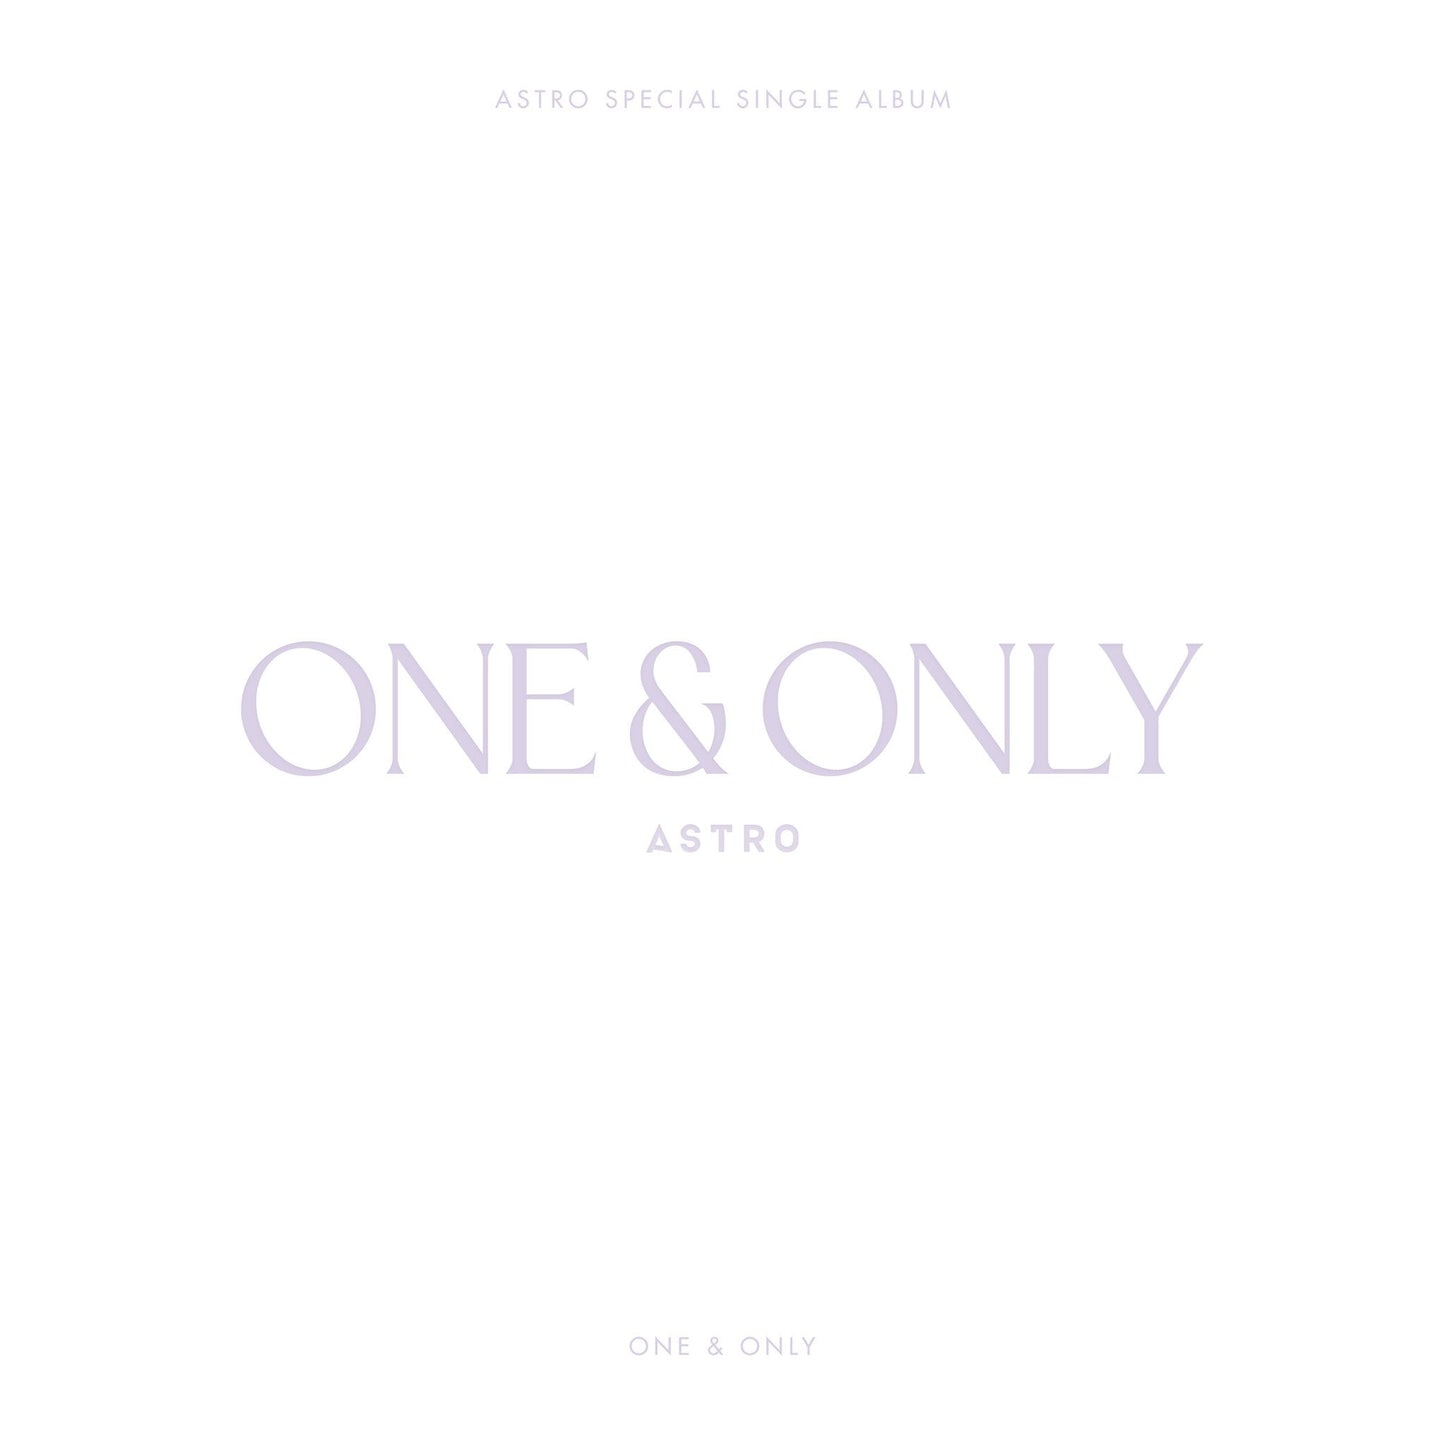 ASTRO SPECIAL SINGLE ALBUM 'ONE & ONLY' - KPOP REPUBLIC